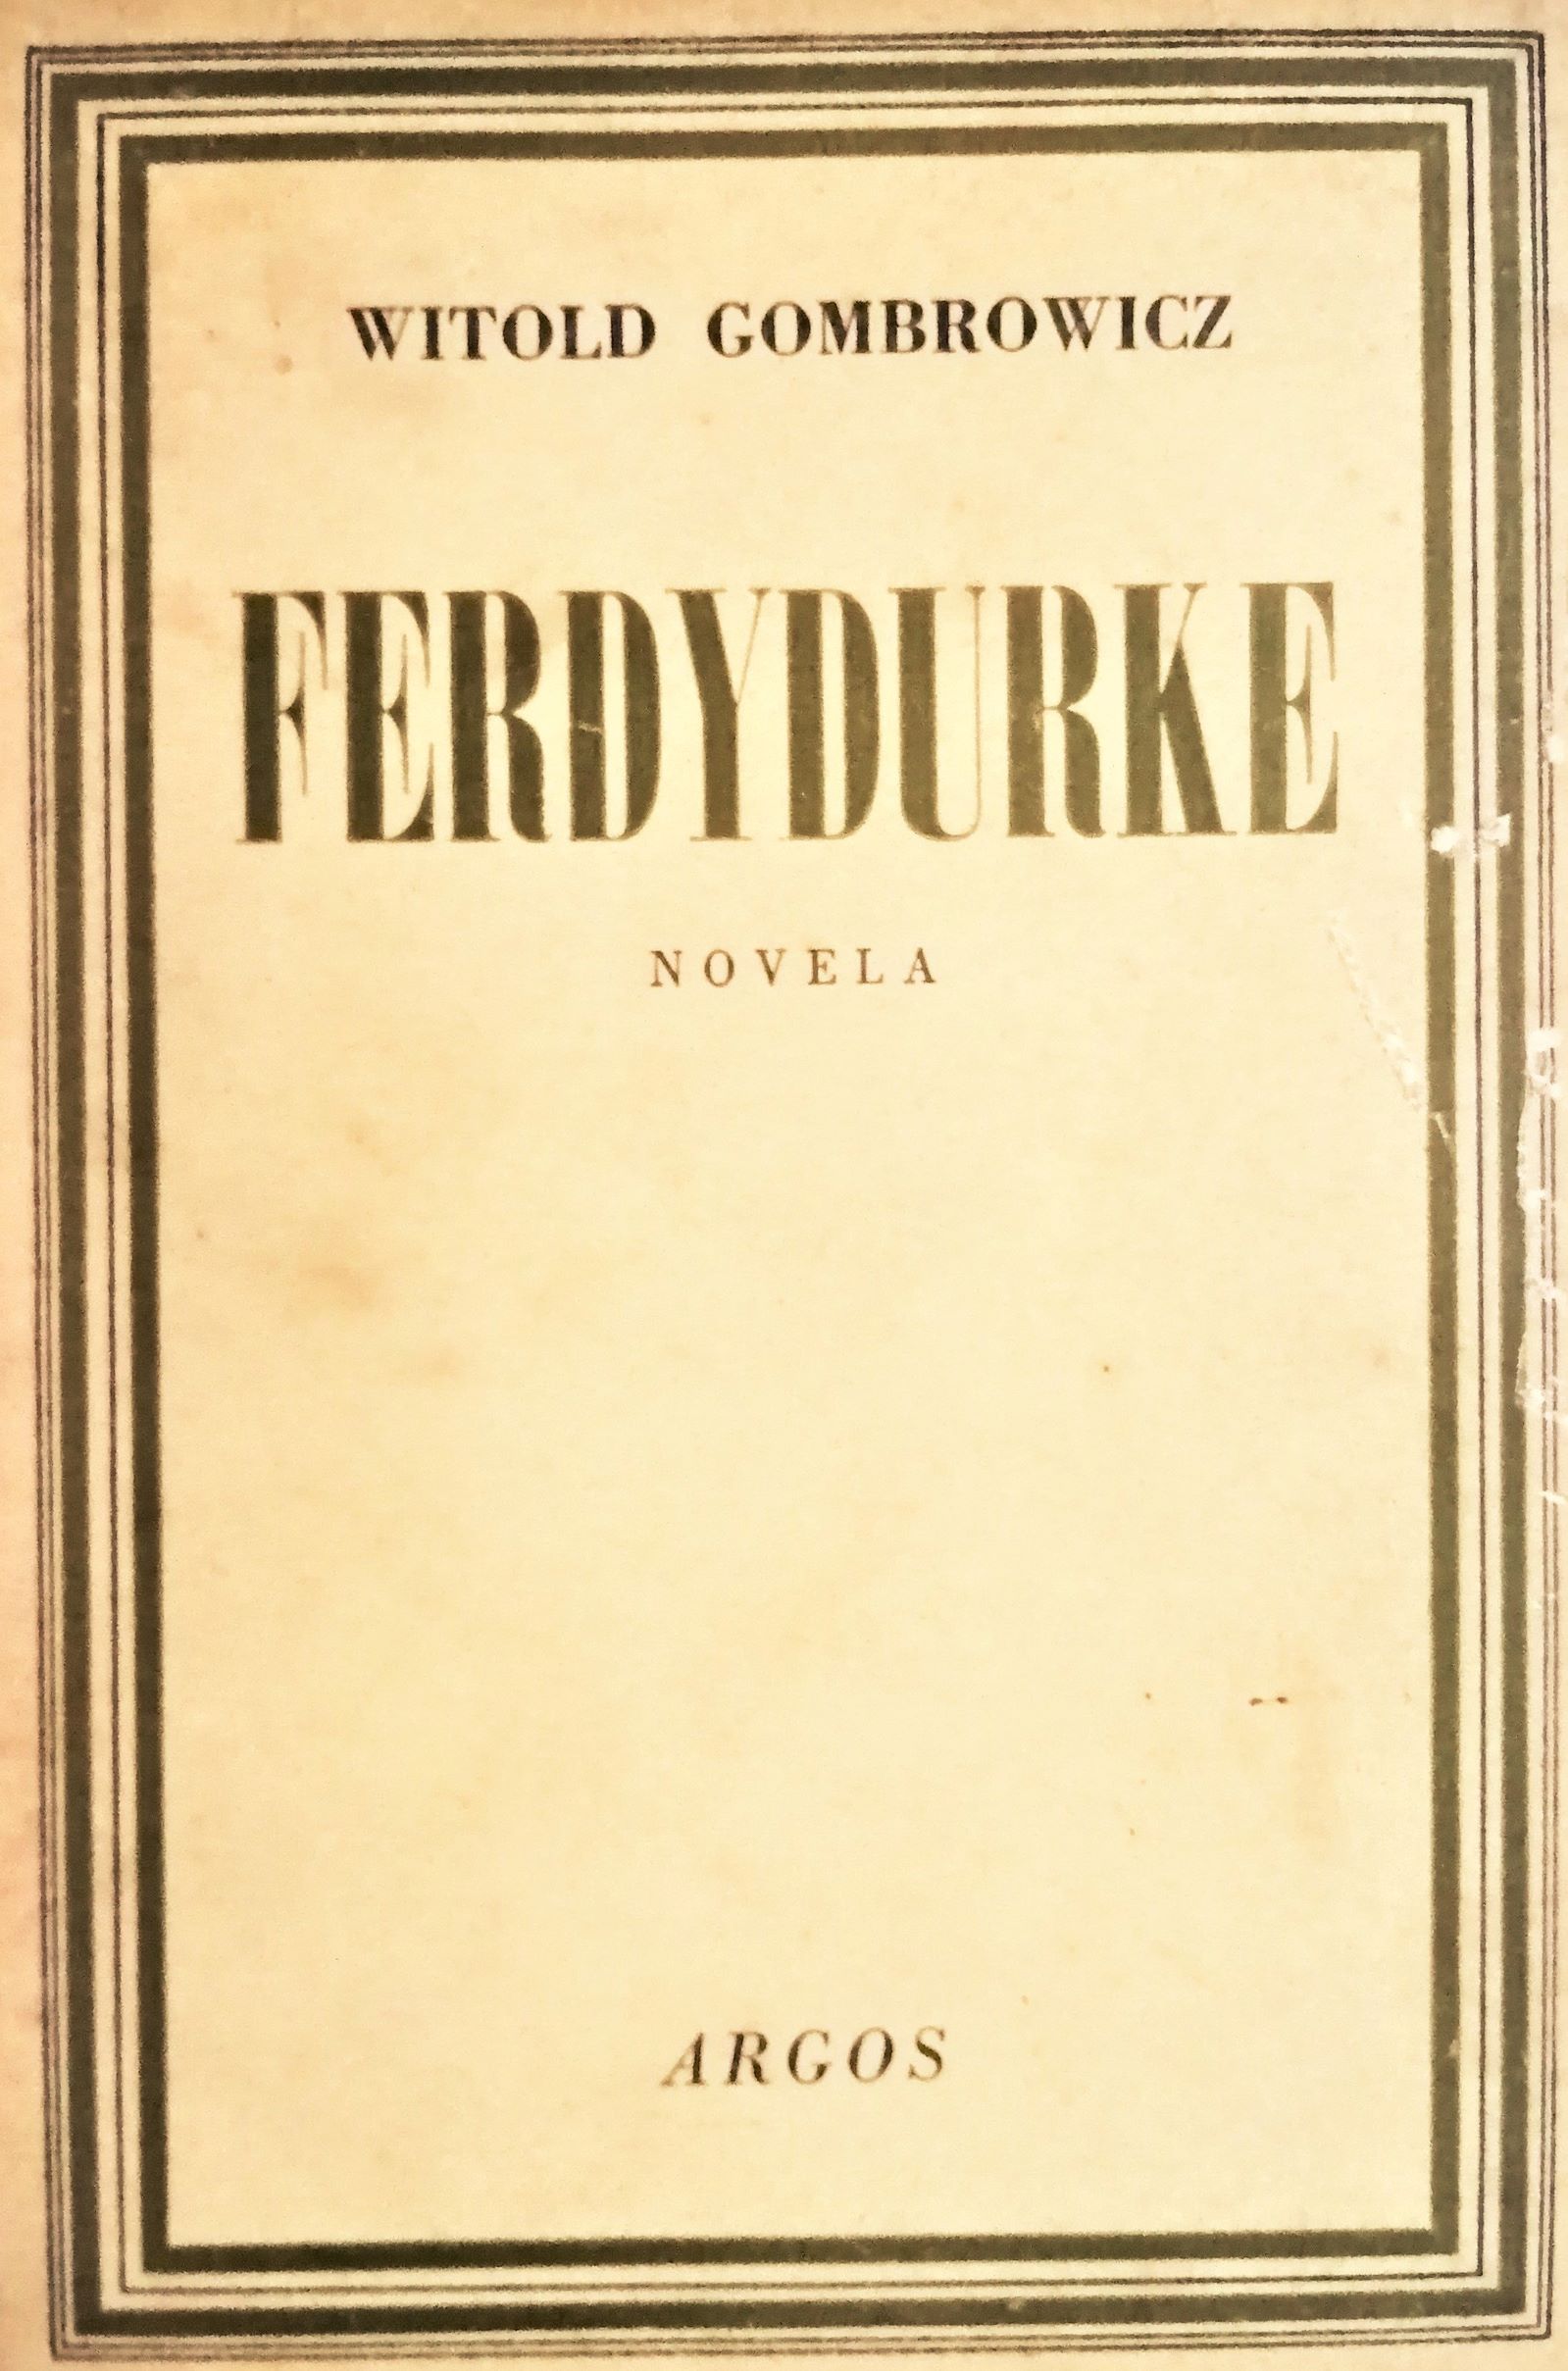 Witold Gombrowicz - Ferdydurke Novela